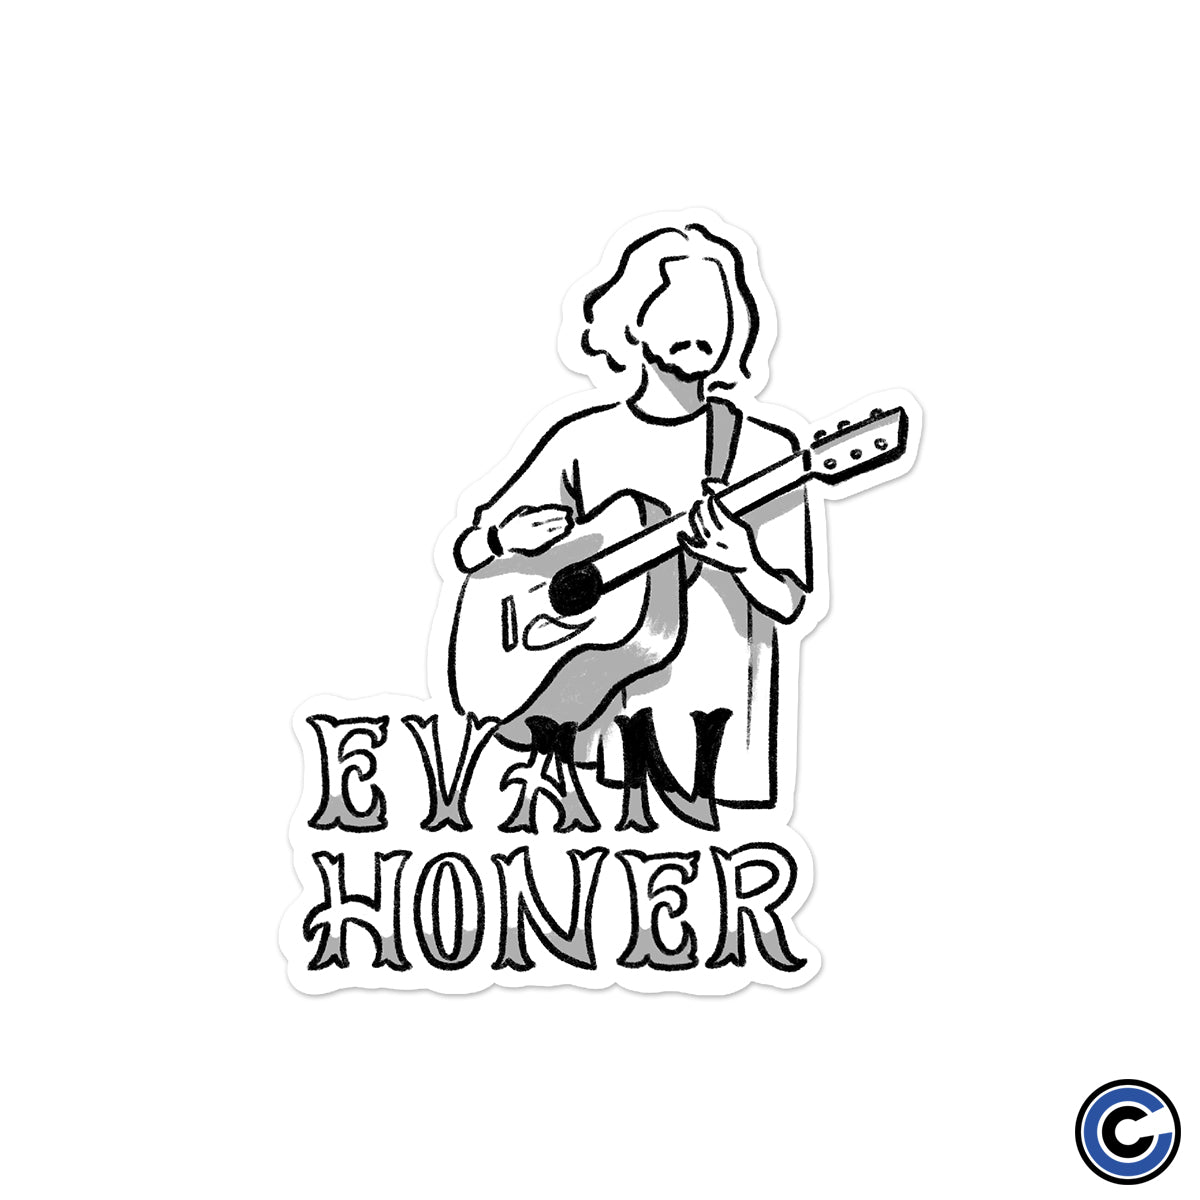 Evan Honer "Guitar" Sticker